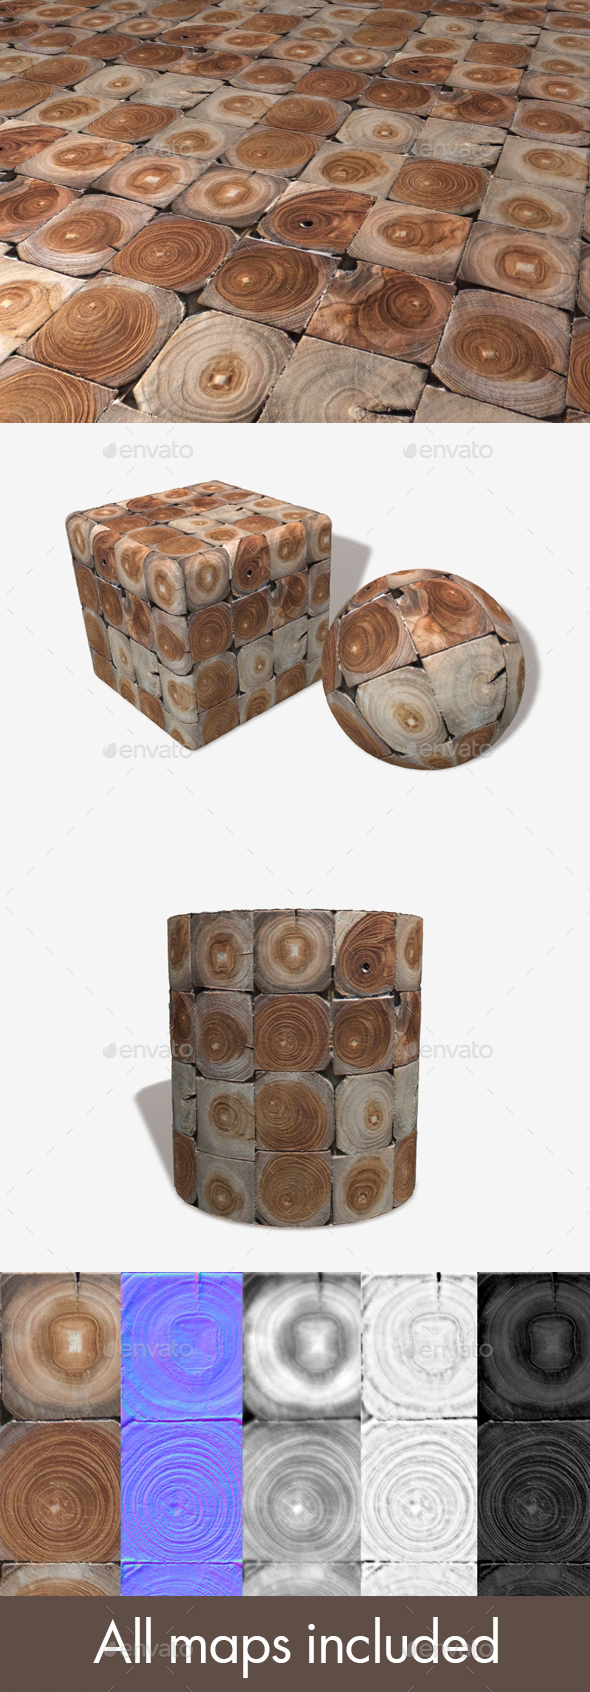 3DOcean Decorative Wooden Tiles Seamless Texture 19671397